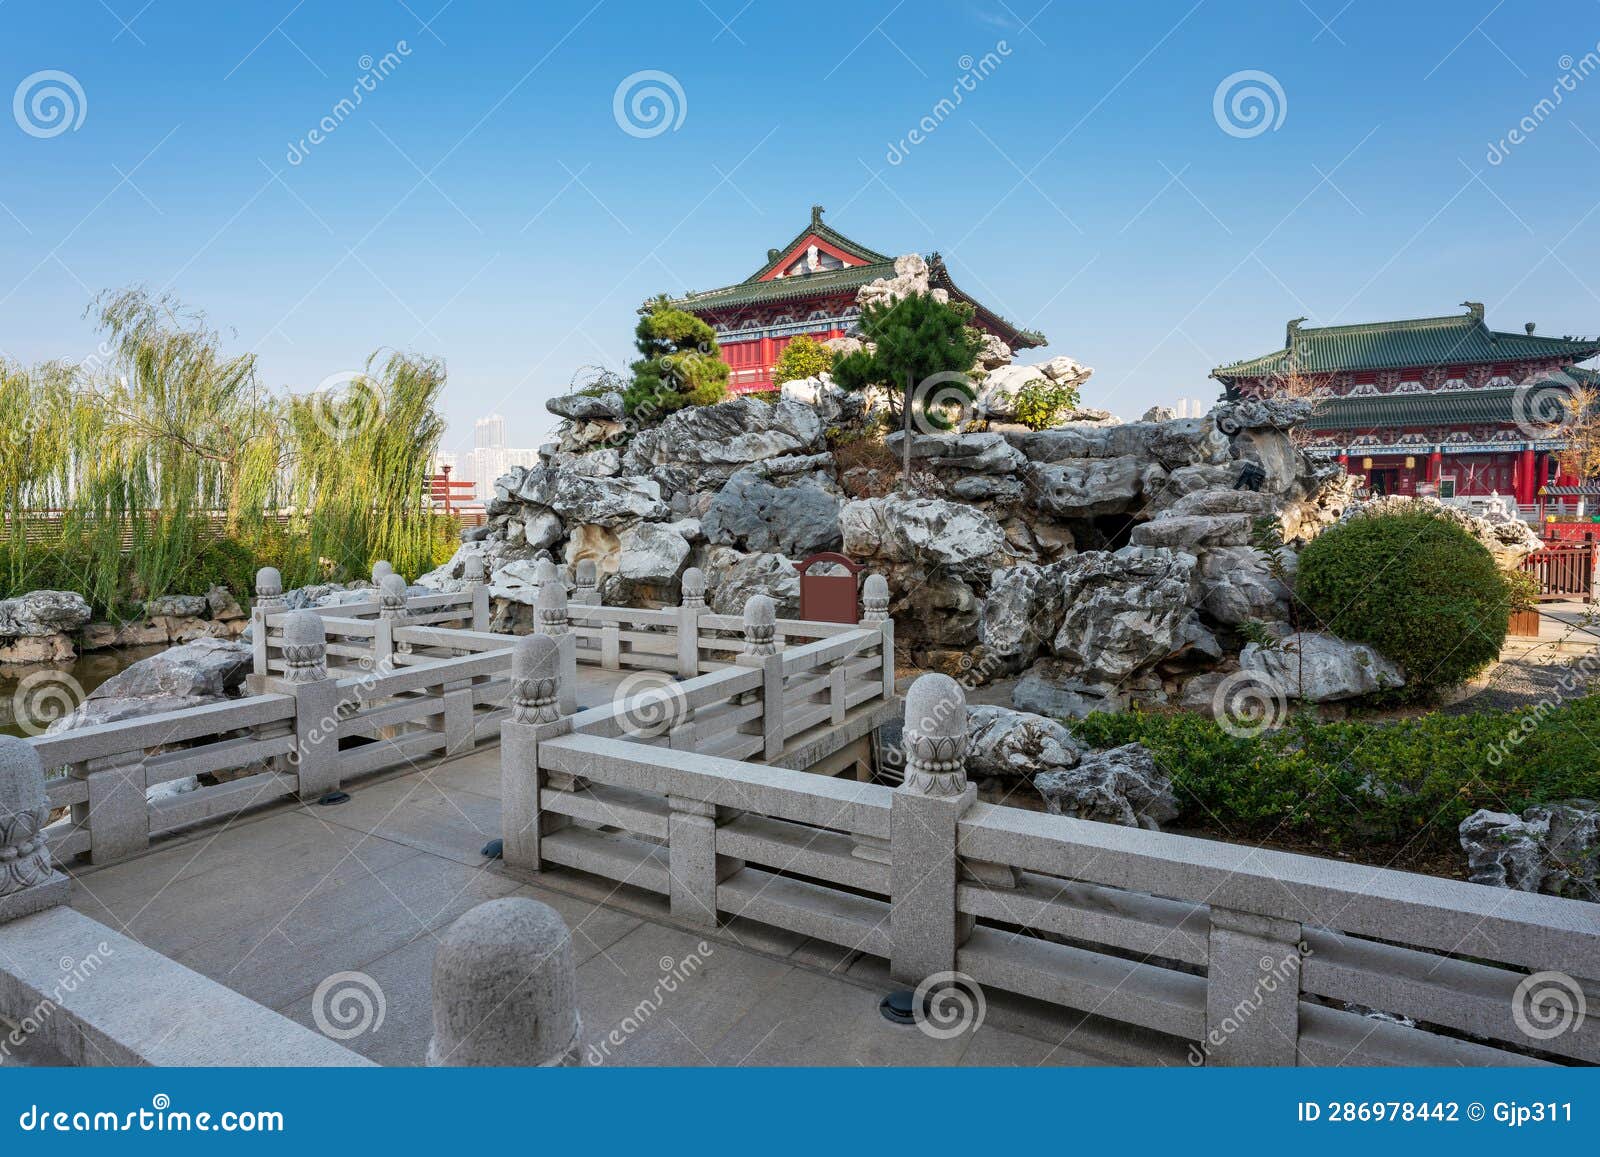 garden of southern changjiang delta